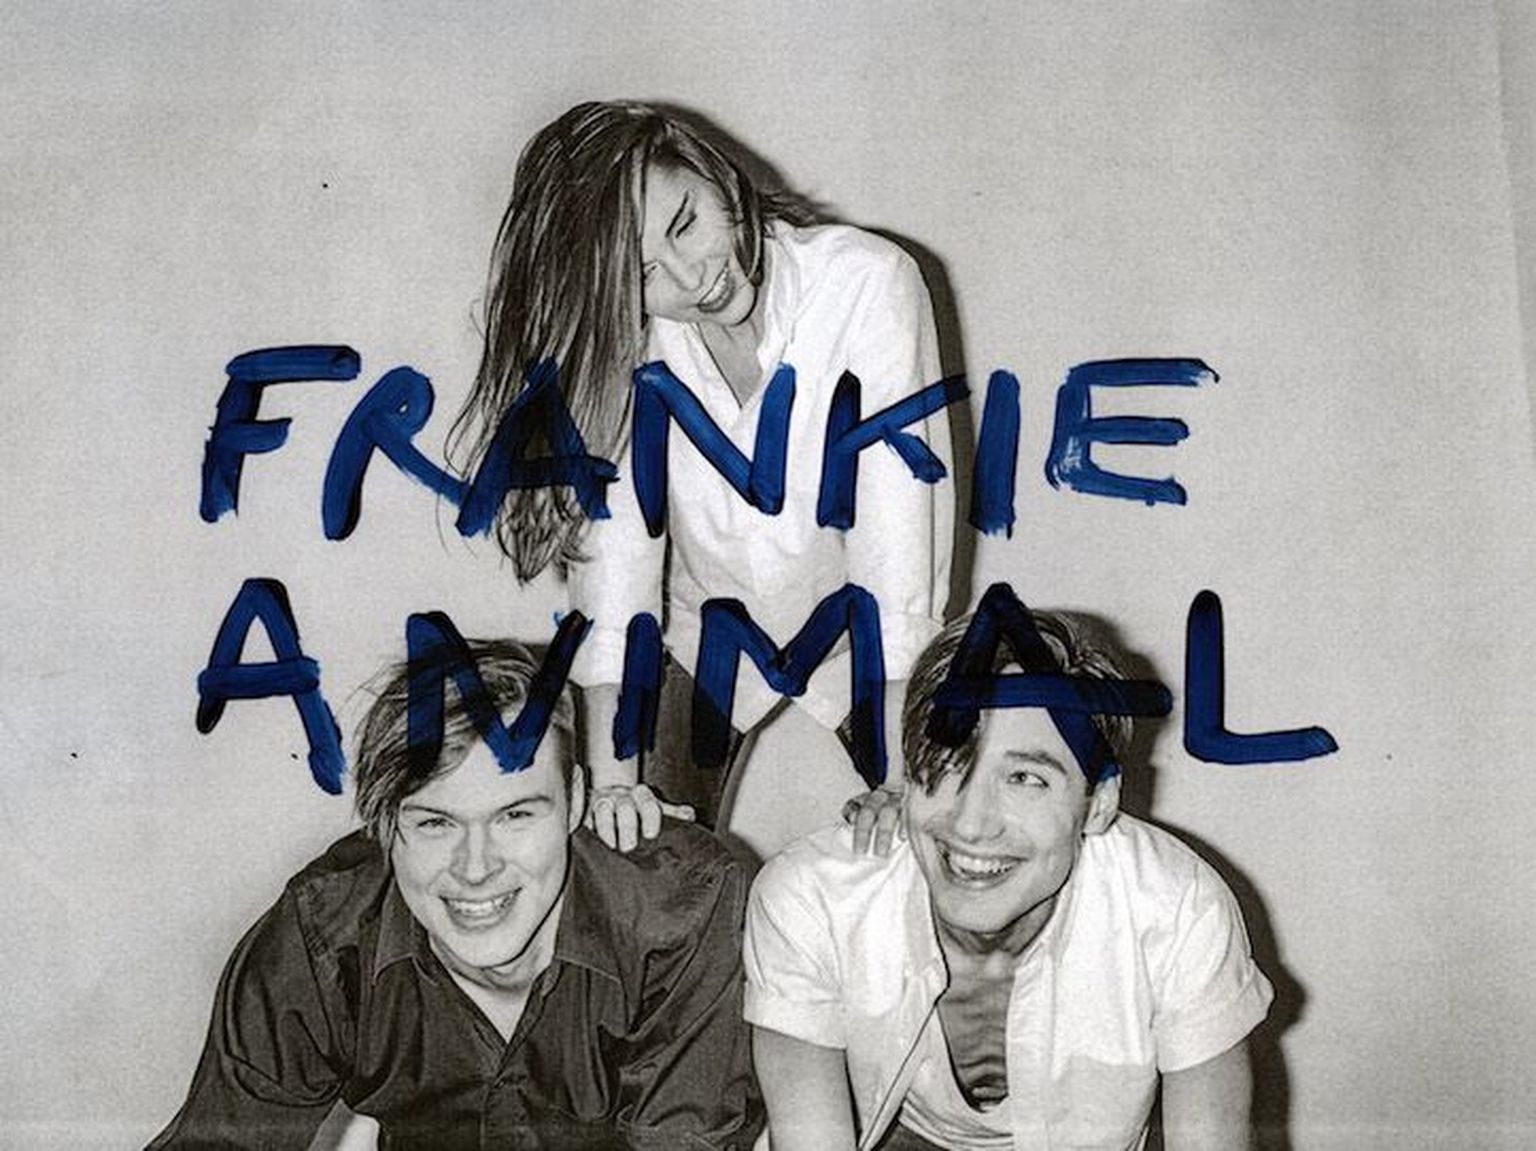 Frankie animal- The Backbeat